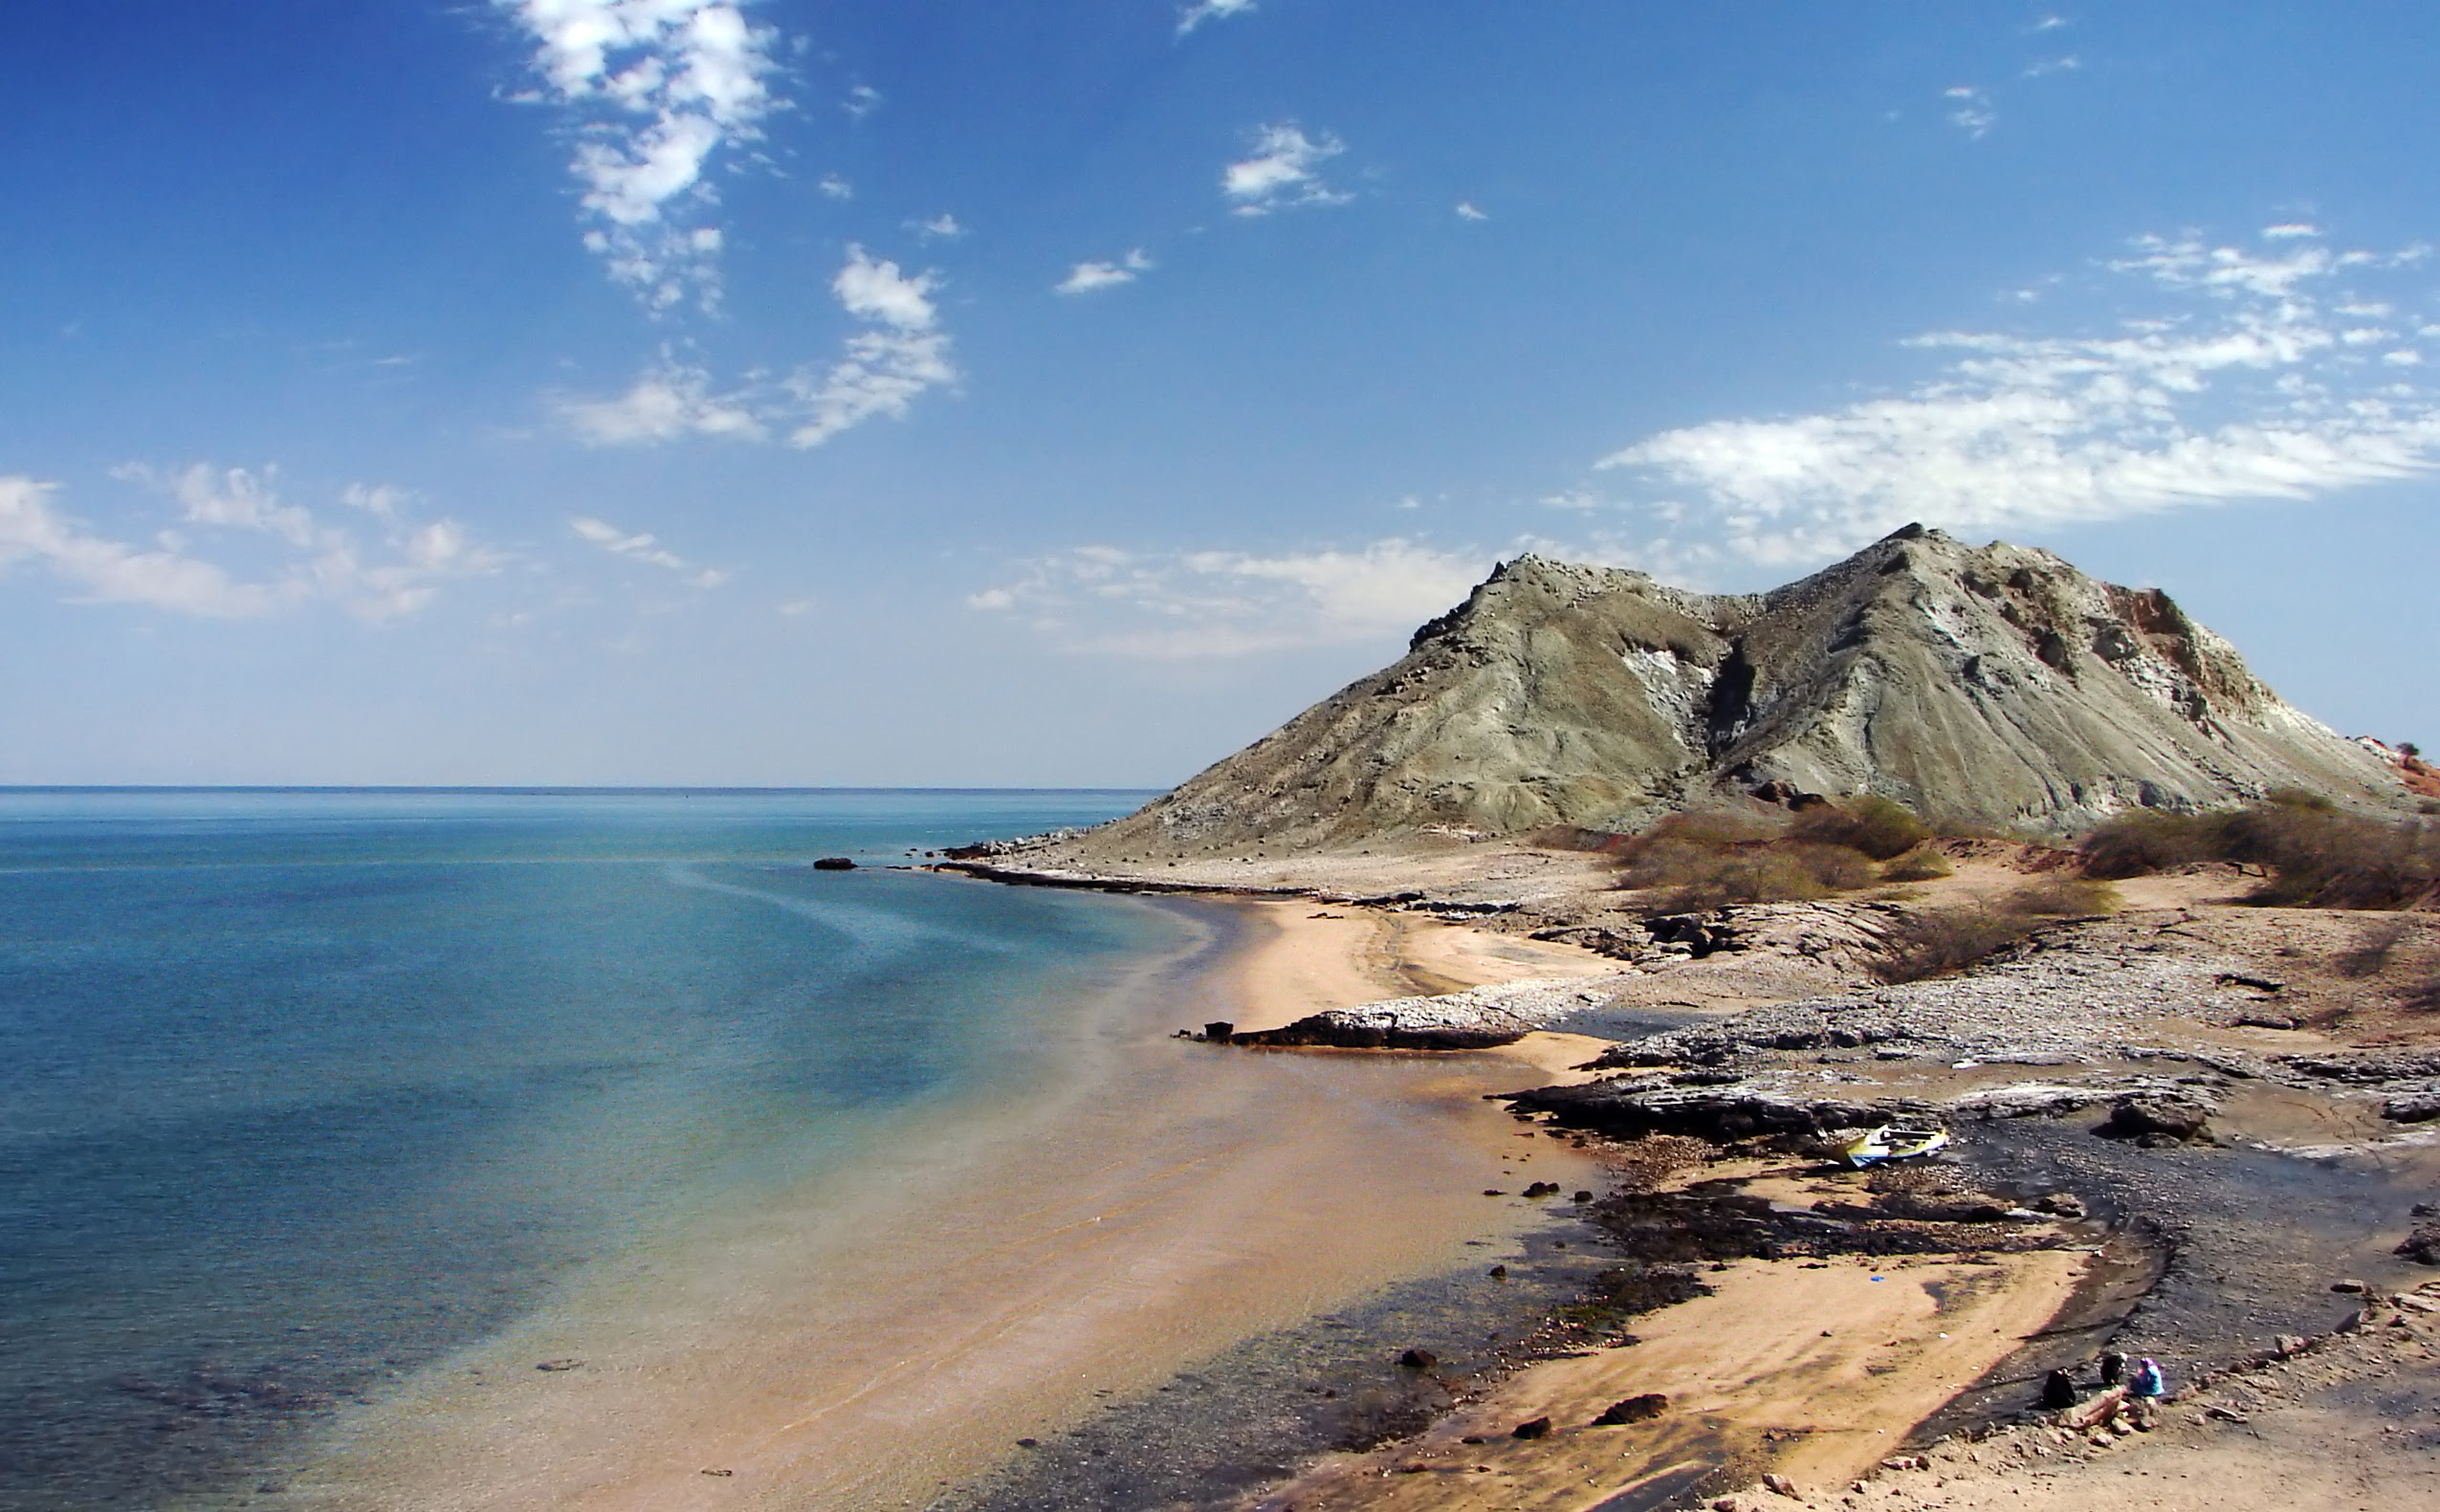 File:Khezr Beach, Hormoz Island, Persian Gulf, Iran, 02-09-2008.jpg